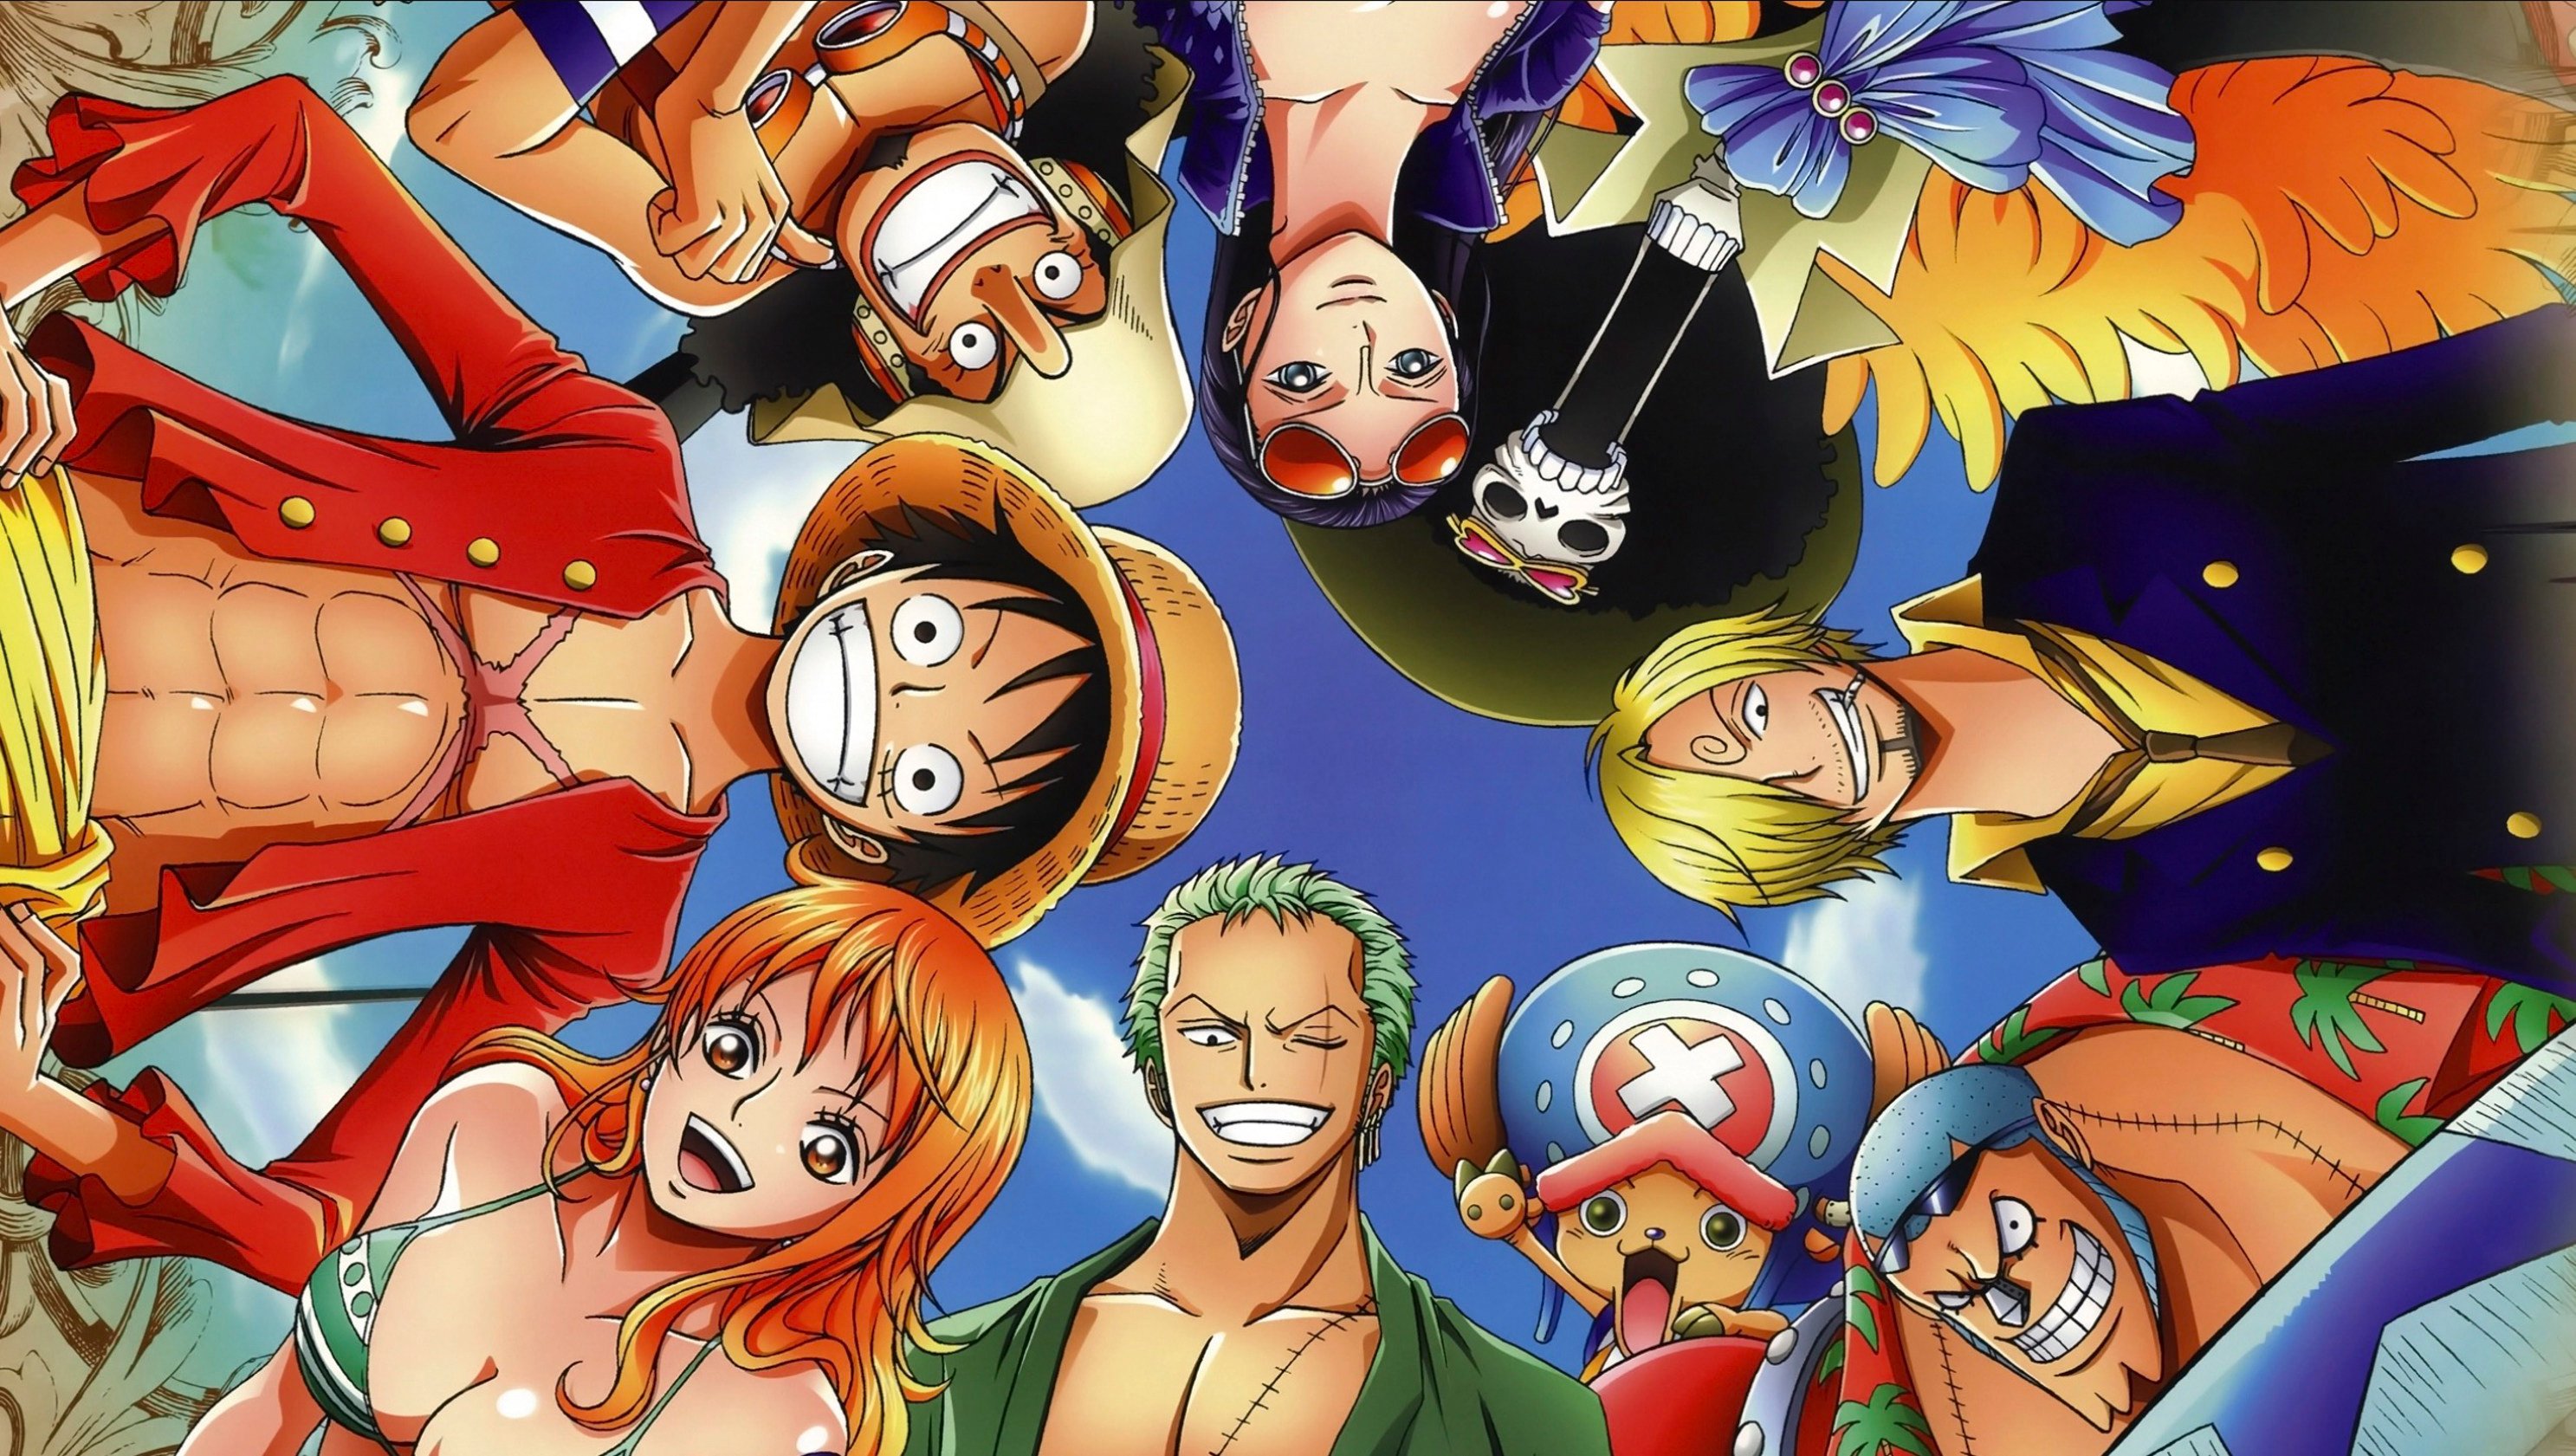 When did One Piece manga start?